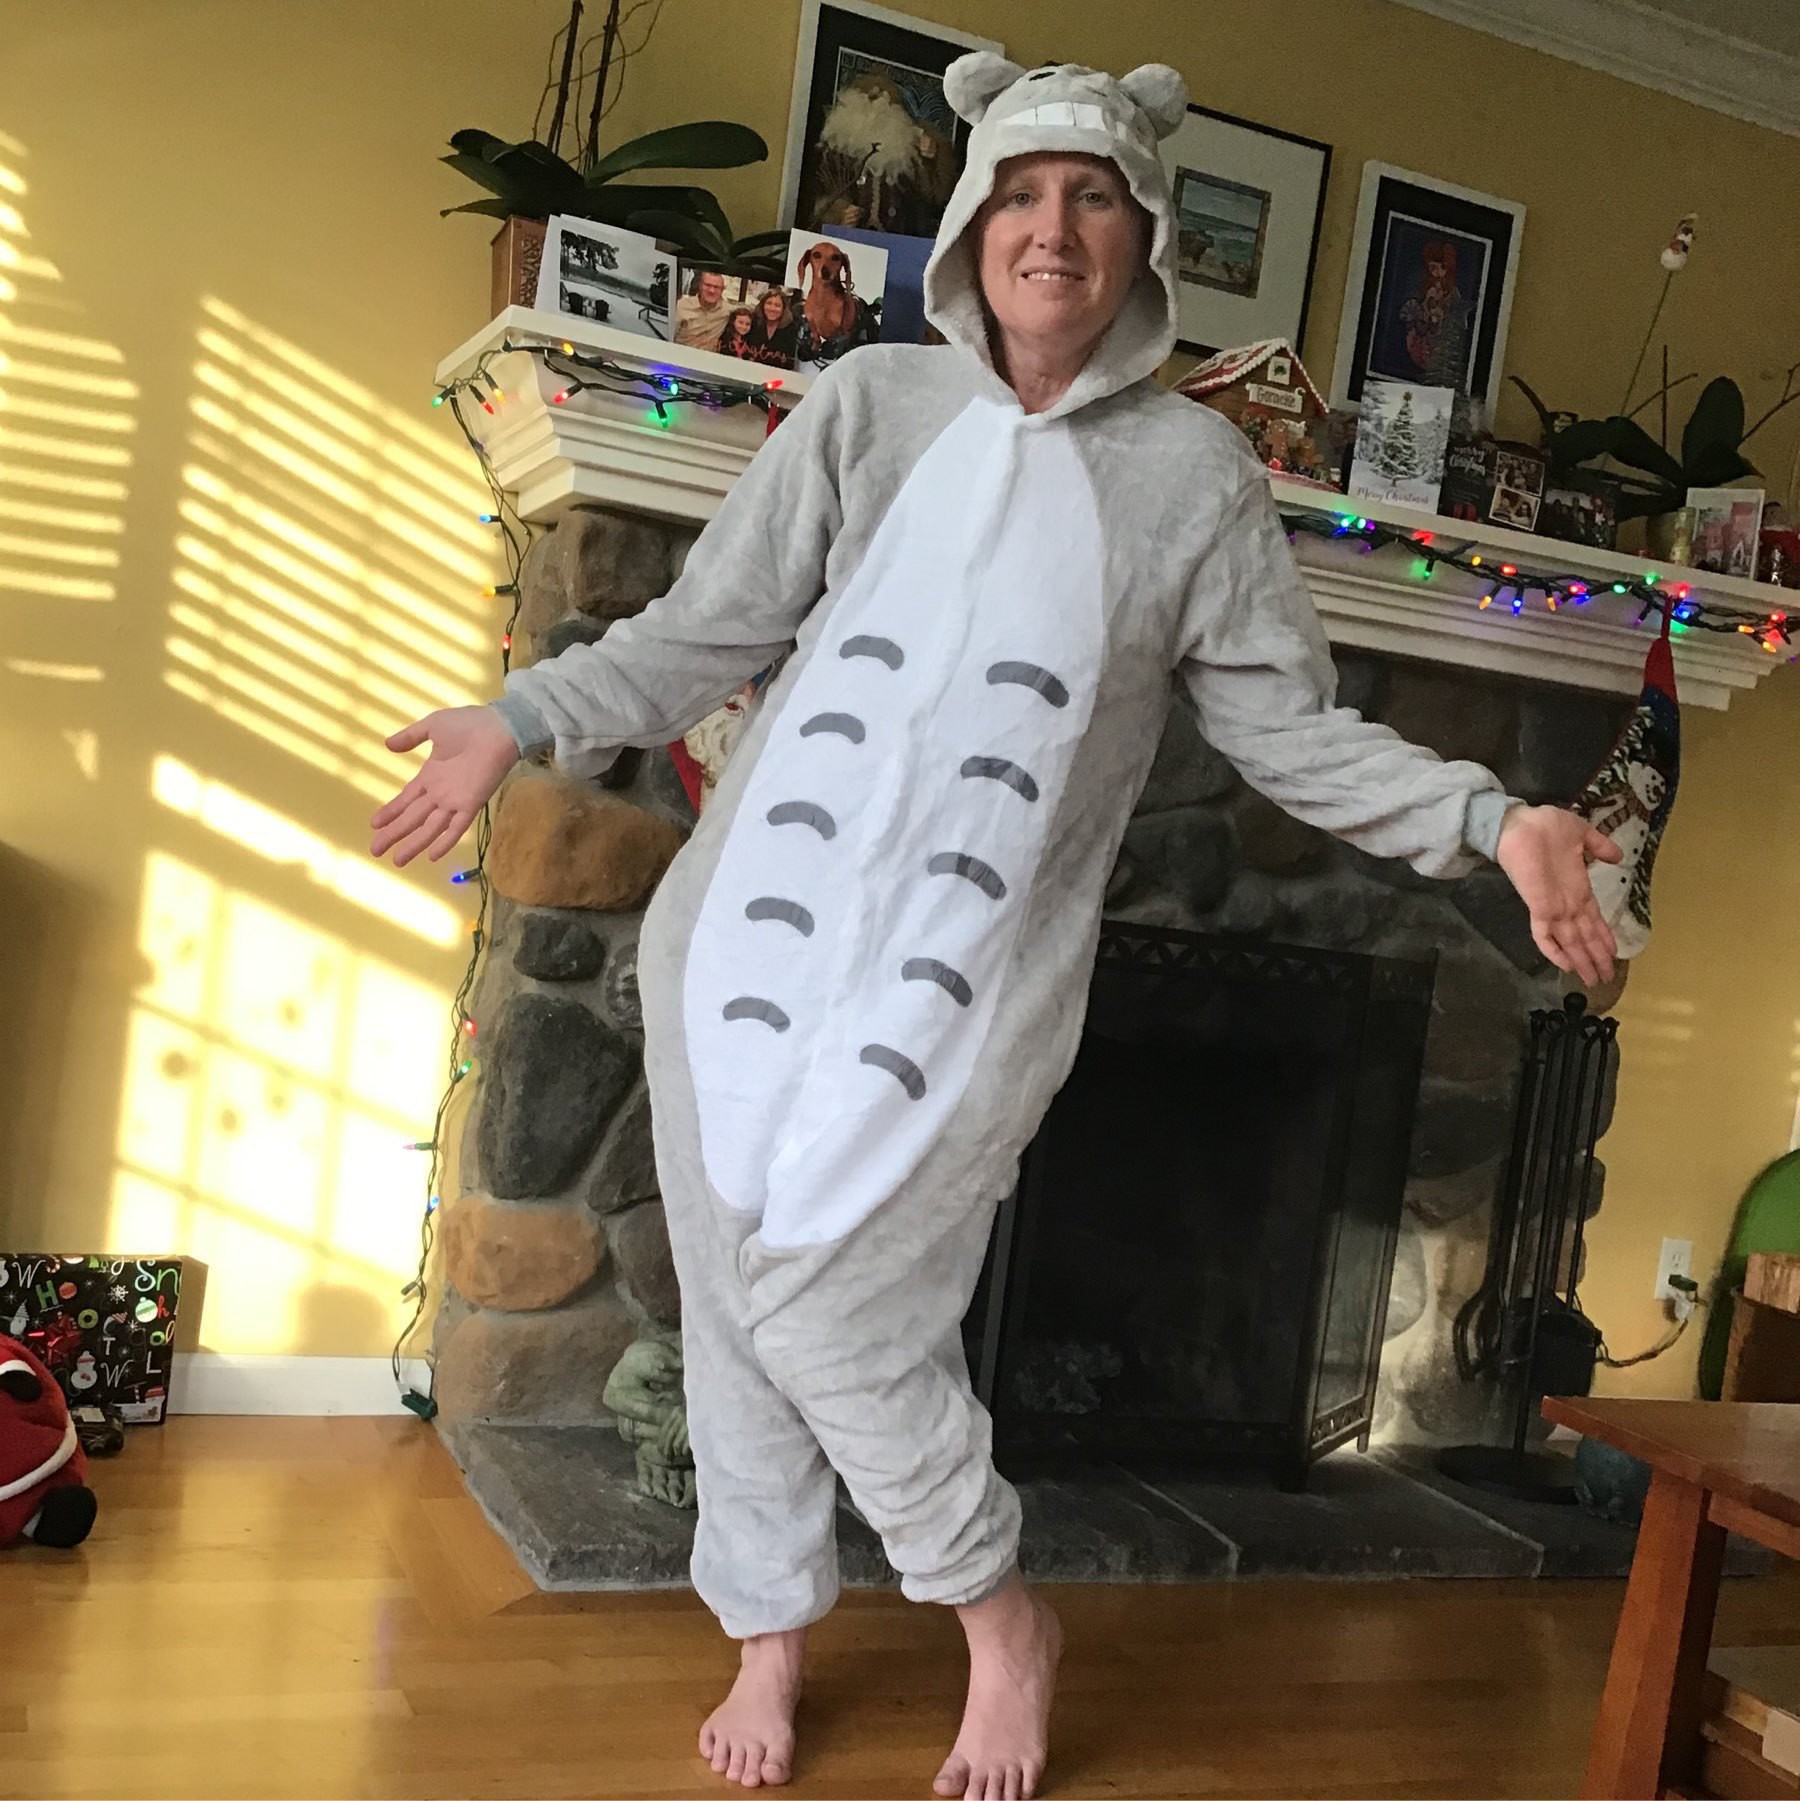 My wife in a Totoro onesie